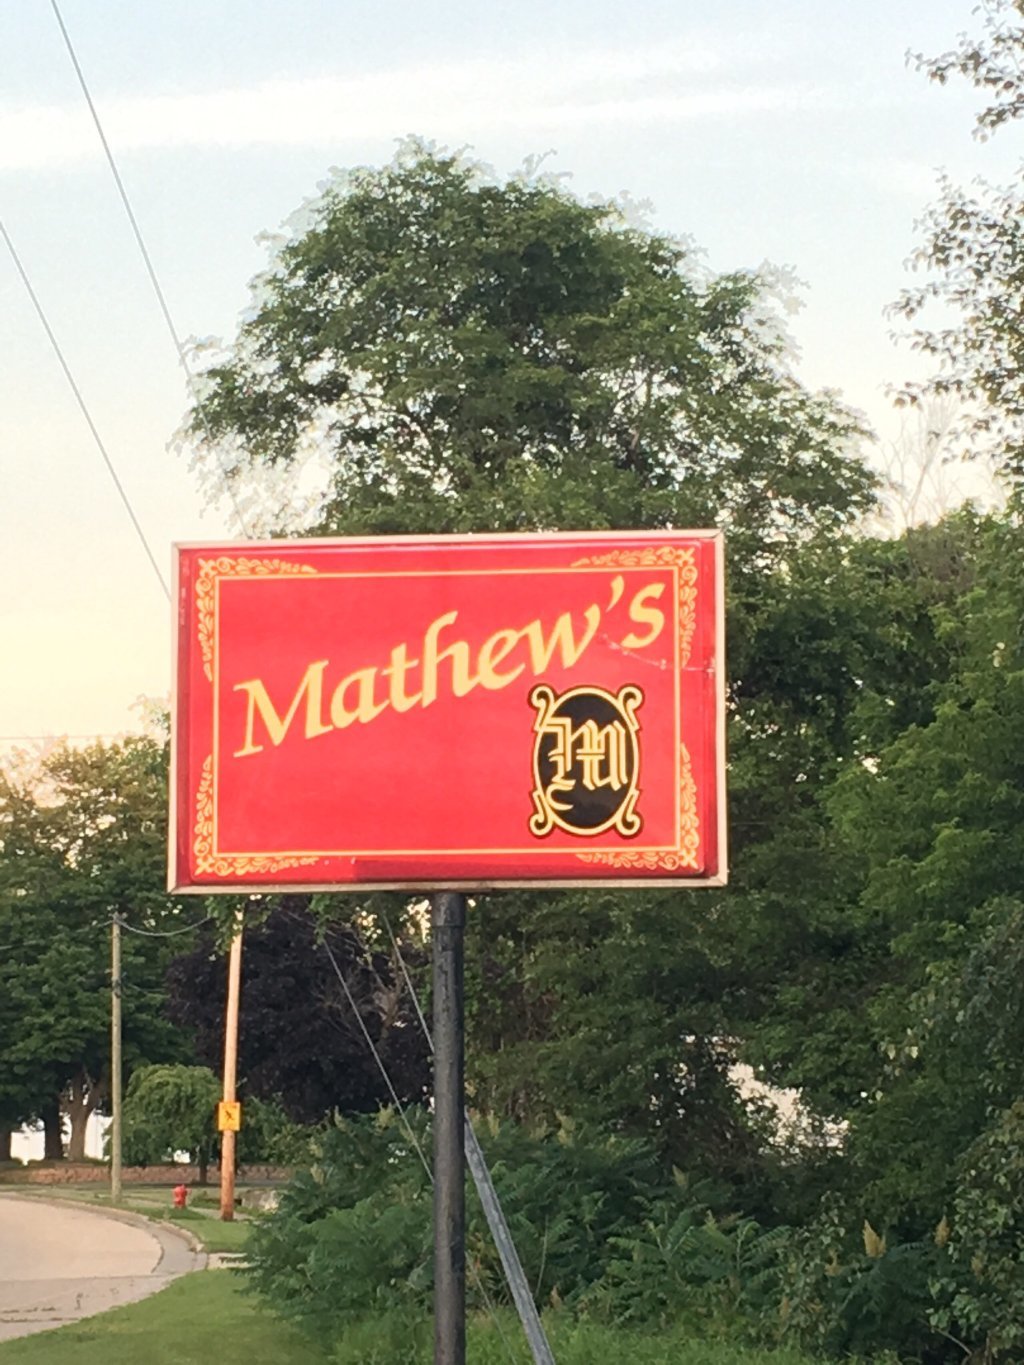 Mathew's Supper Club